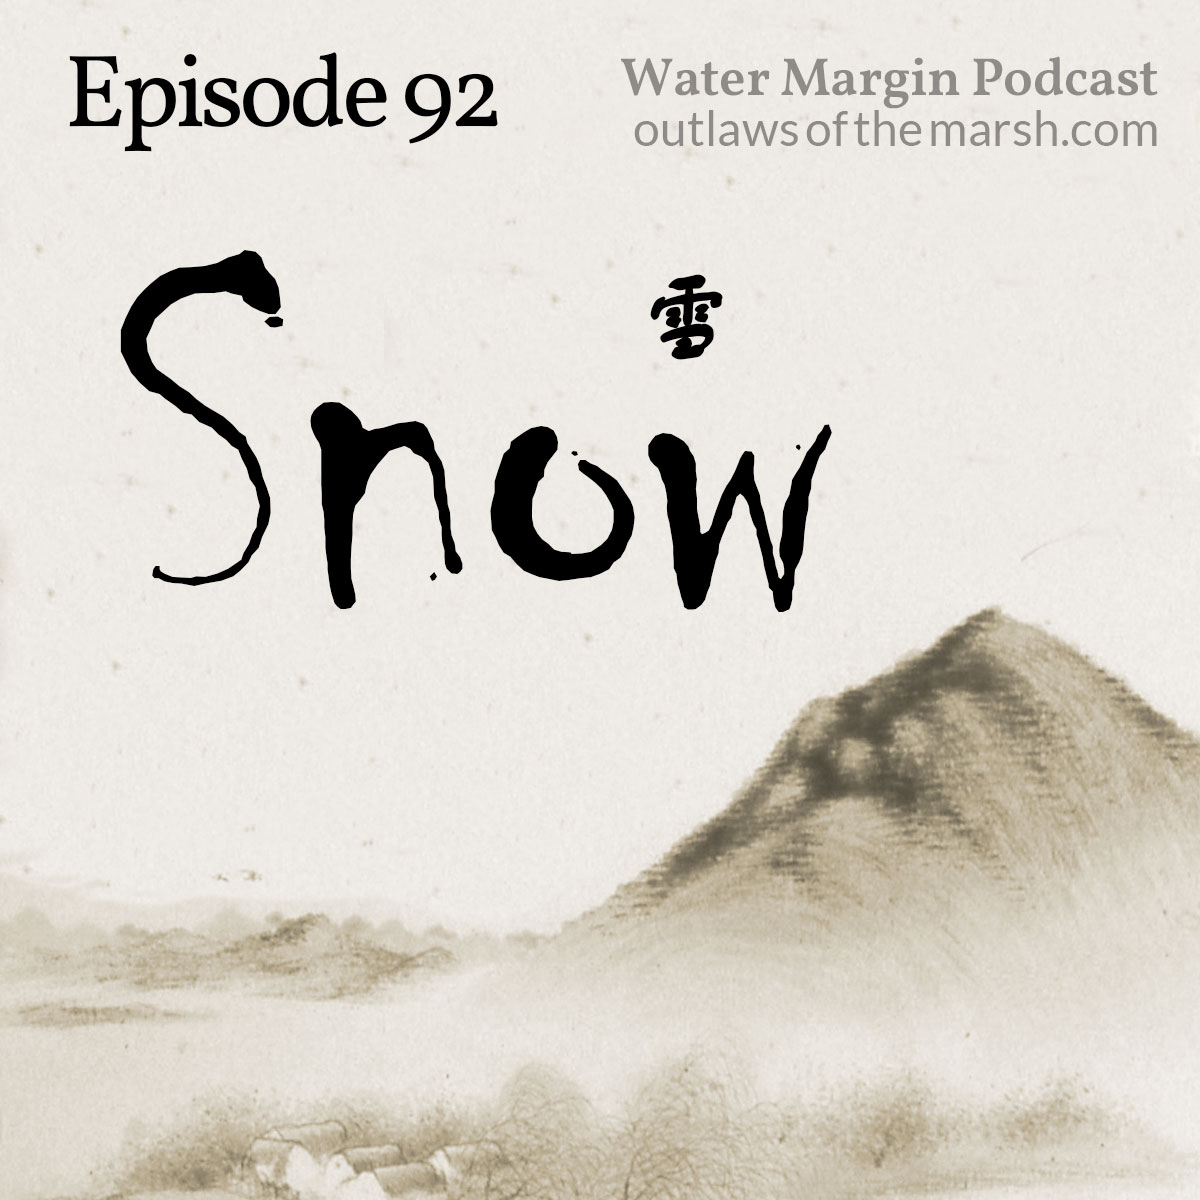 Water Margin Podcast: Episode 092